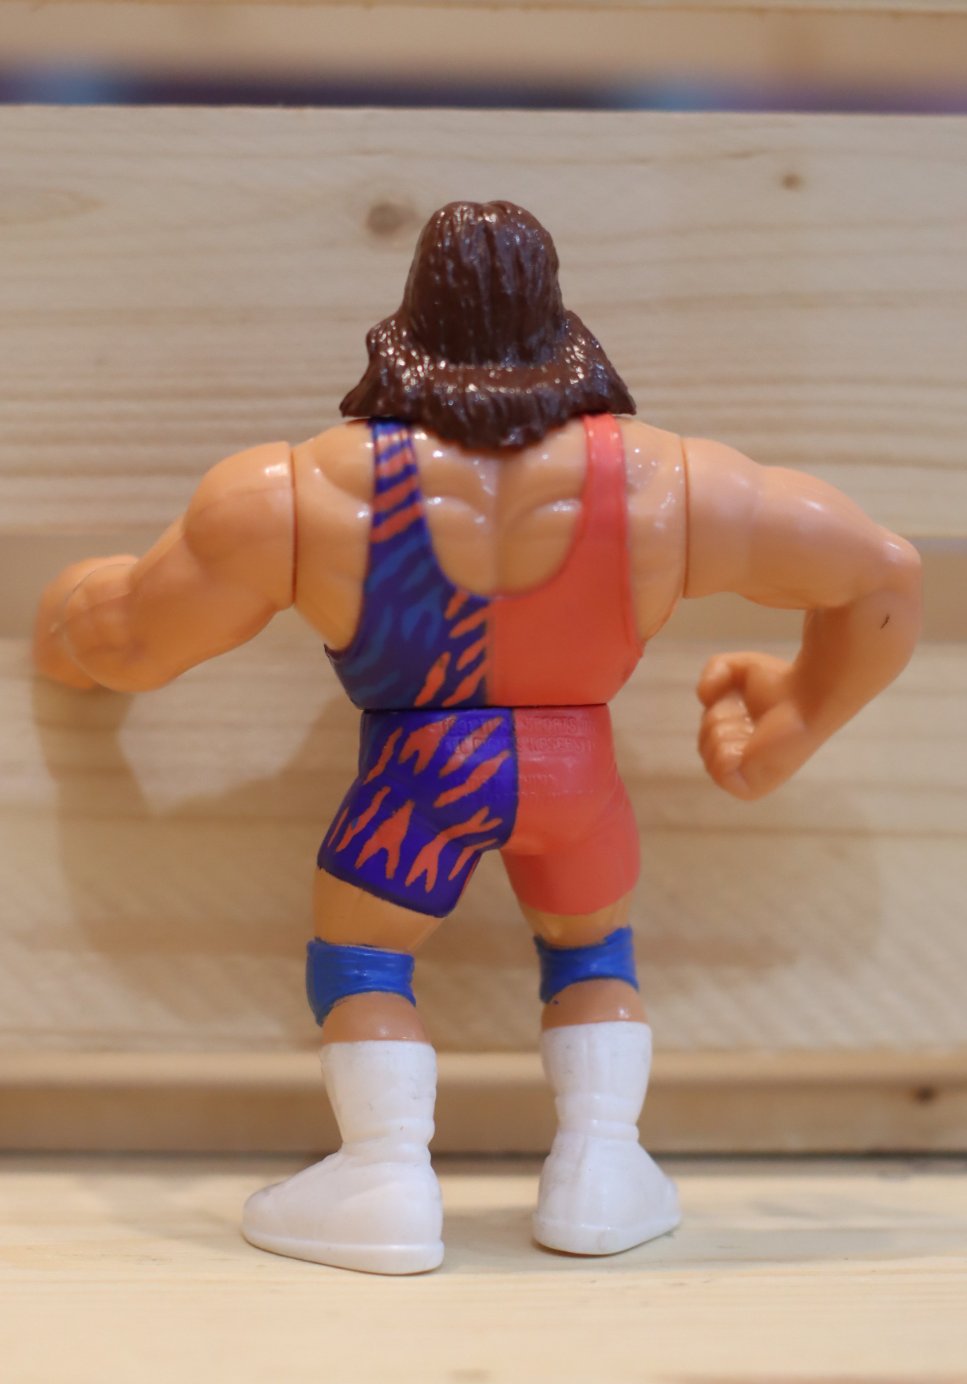 1992 Hasbro Scott Steiner Loose WWF Wrestling Figure Mint!